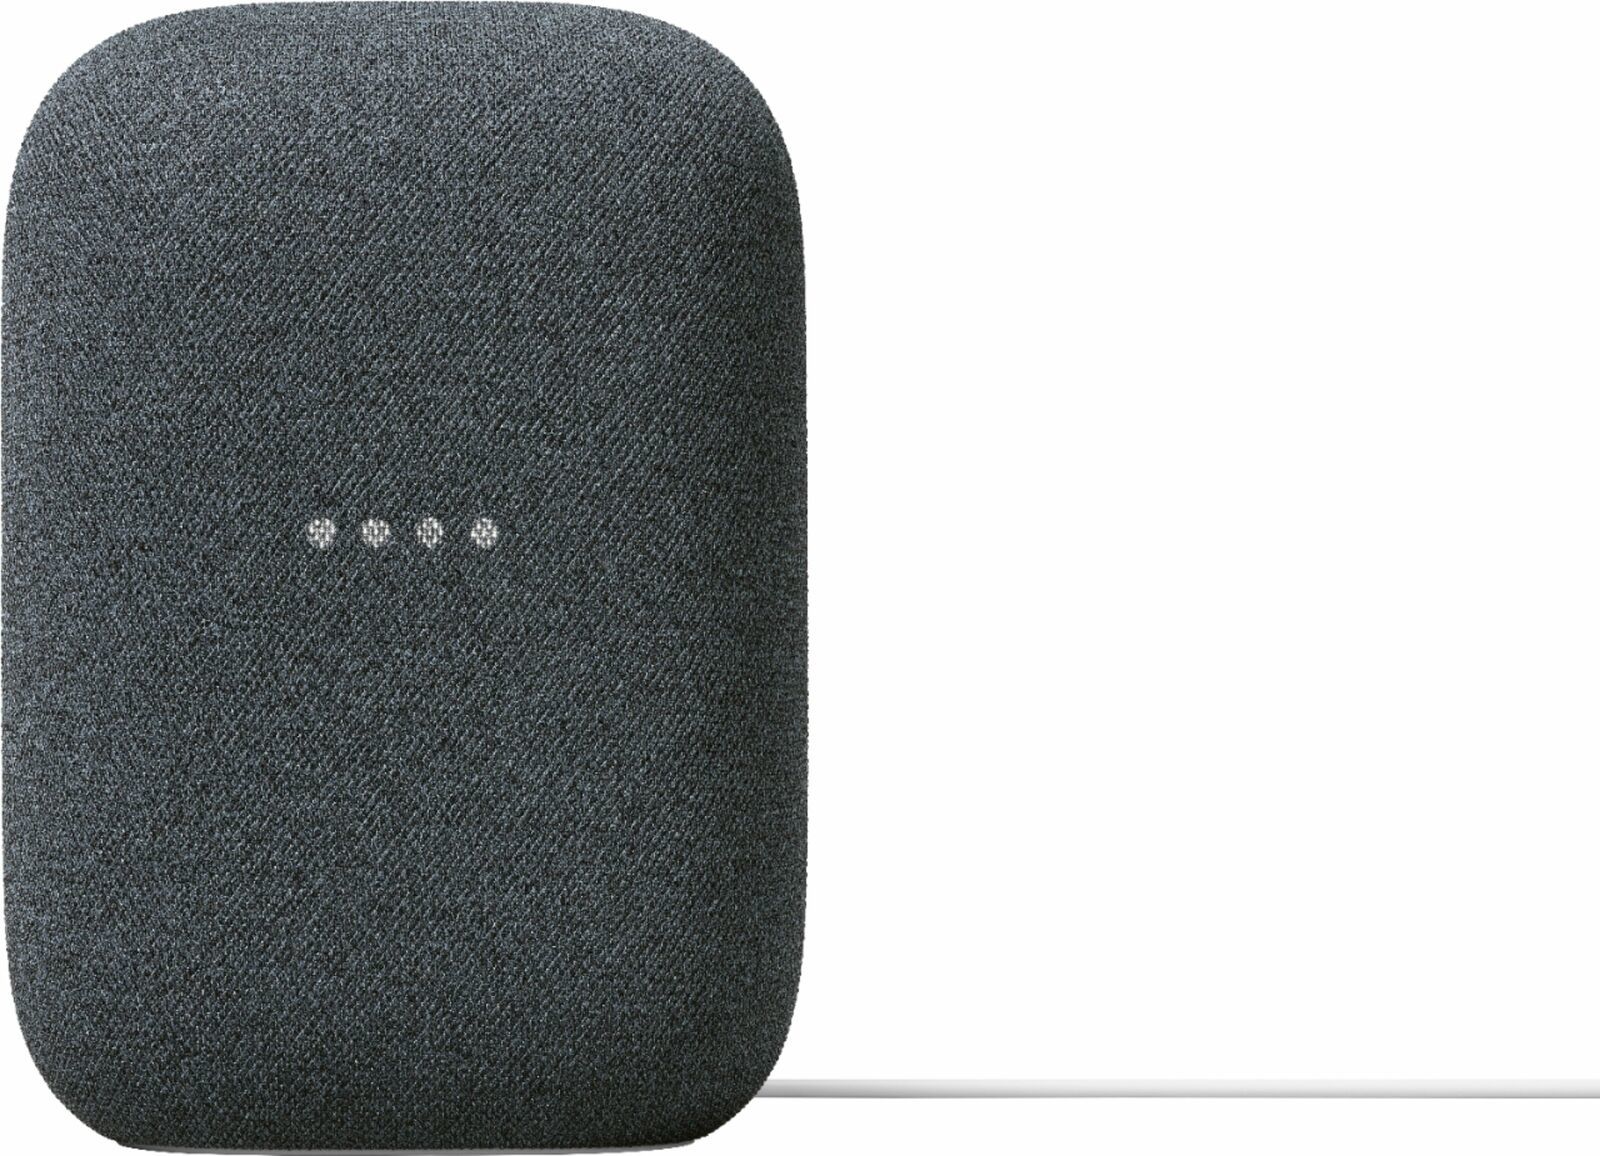 Google - Nest Audio - Smart Speaker - Charcoal - $169.99